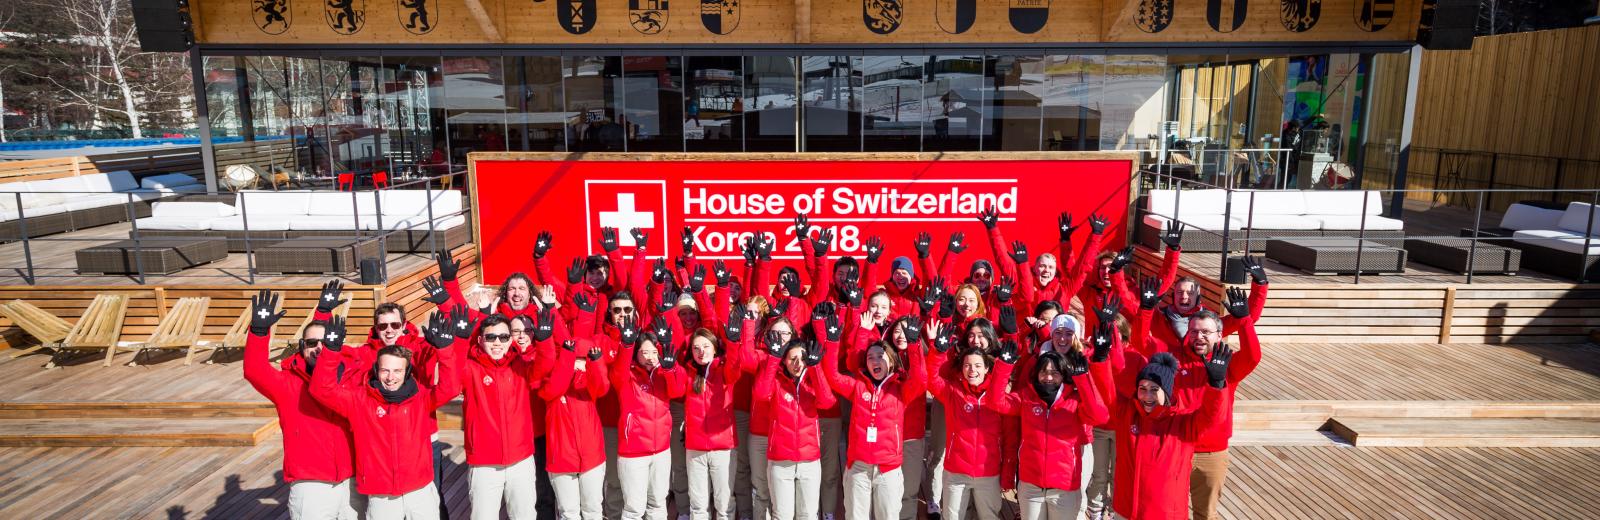 House of Switzerland Korea 2018